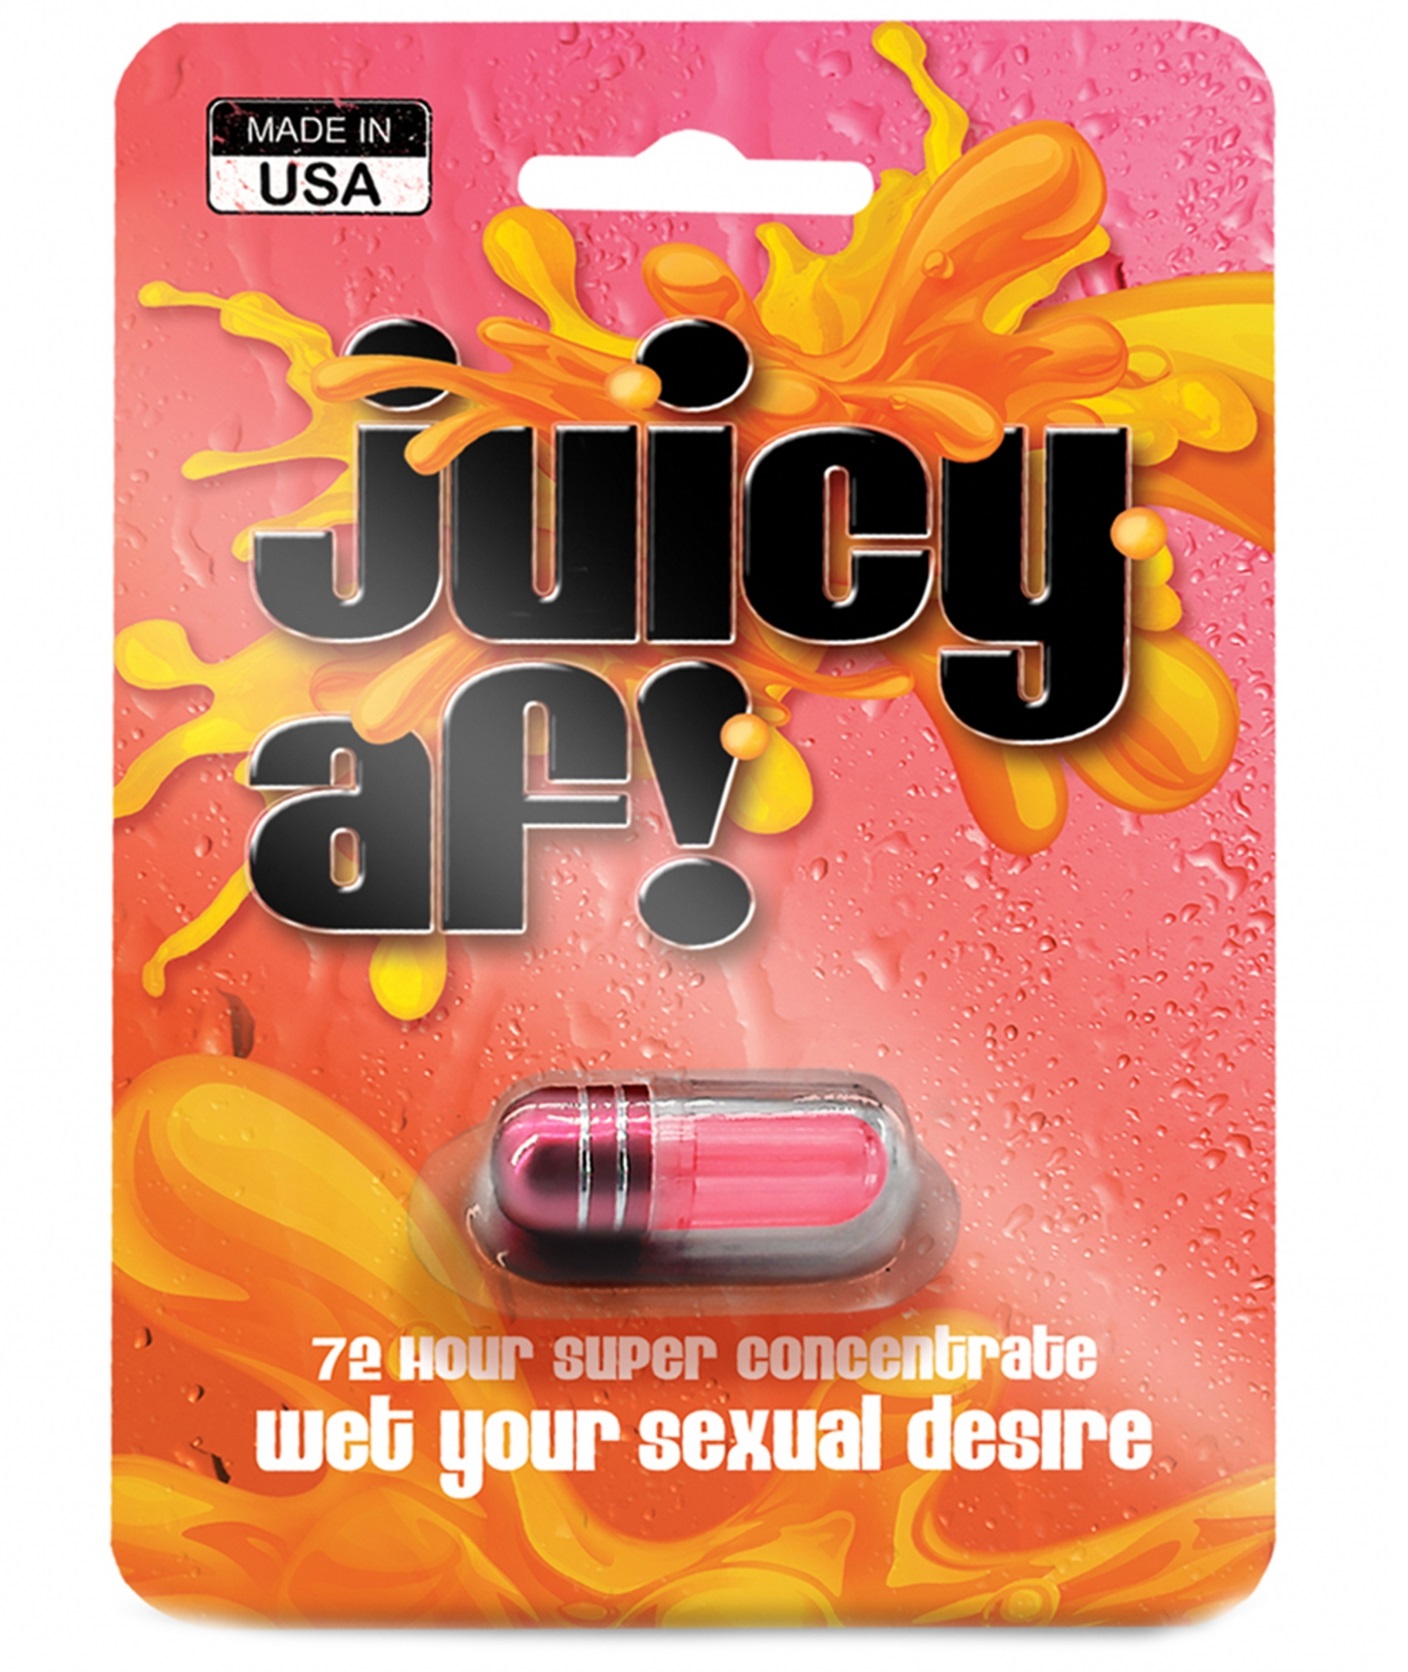 Stimulent Femei, Juicy AF - Libido Pill for Women